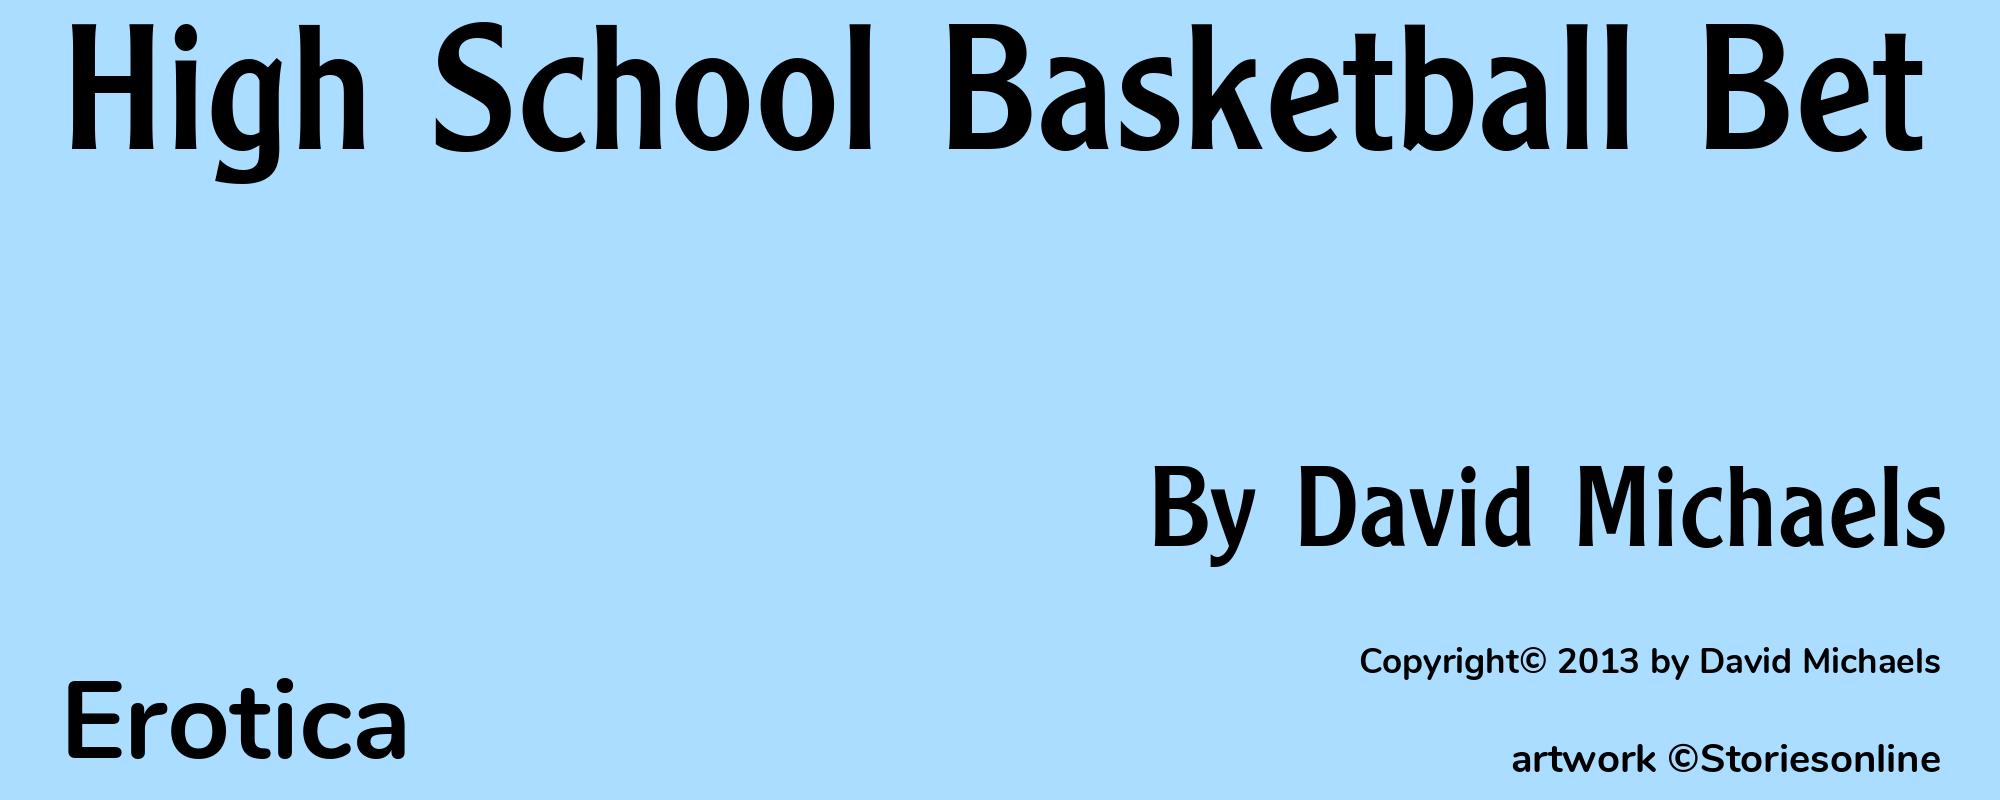 High School Basketball Bet - Cover